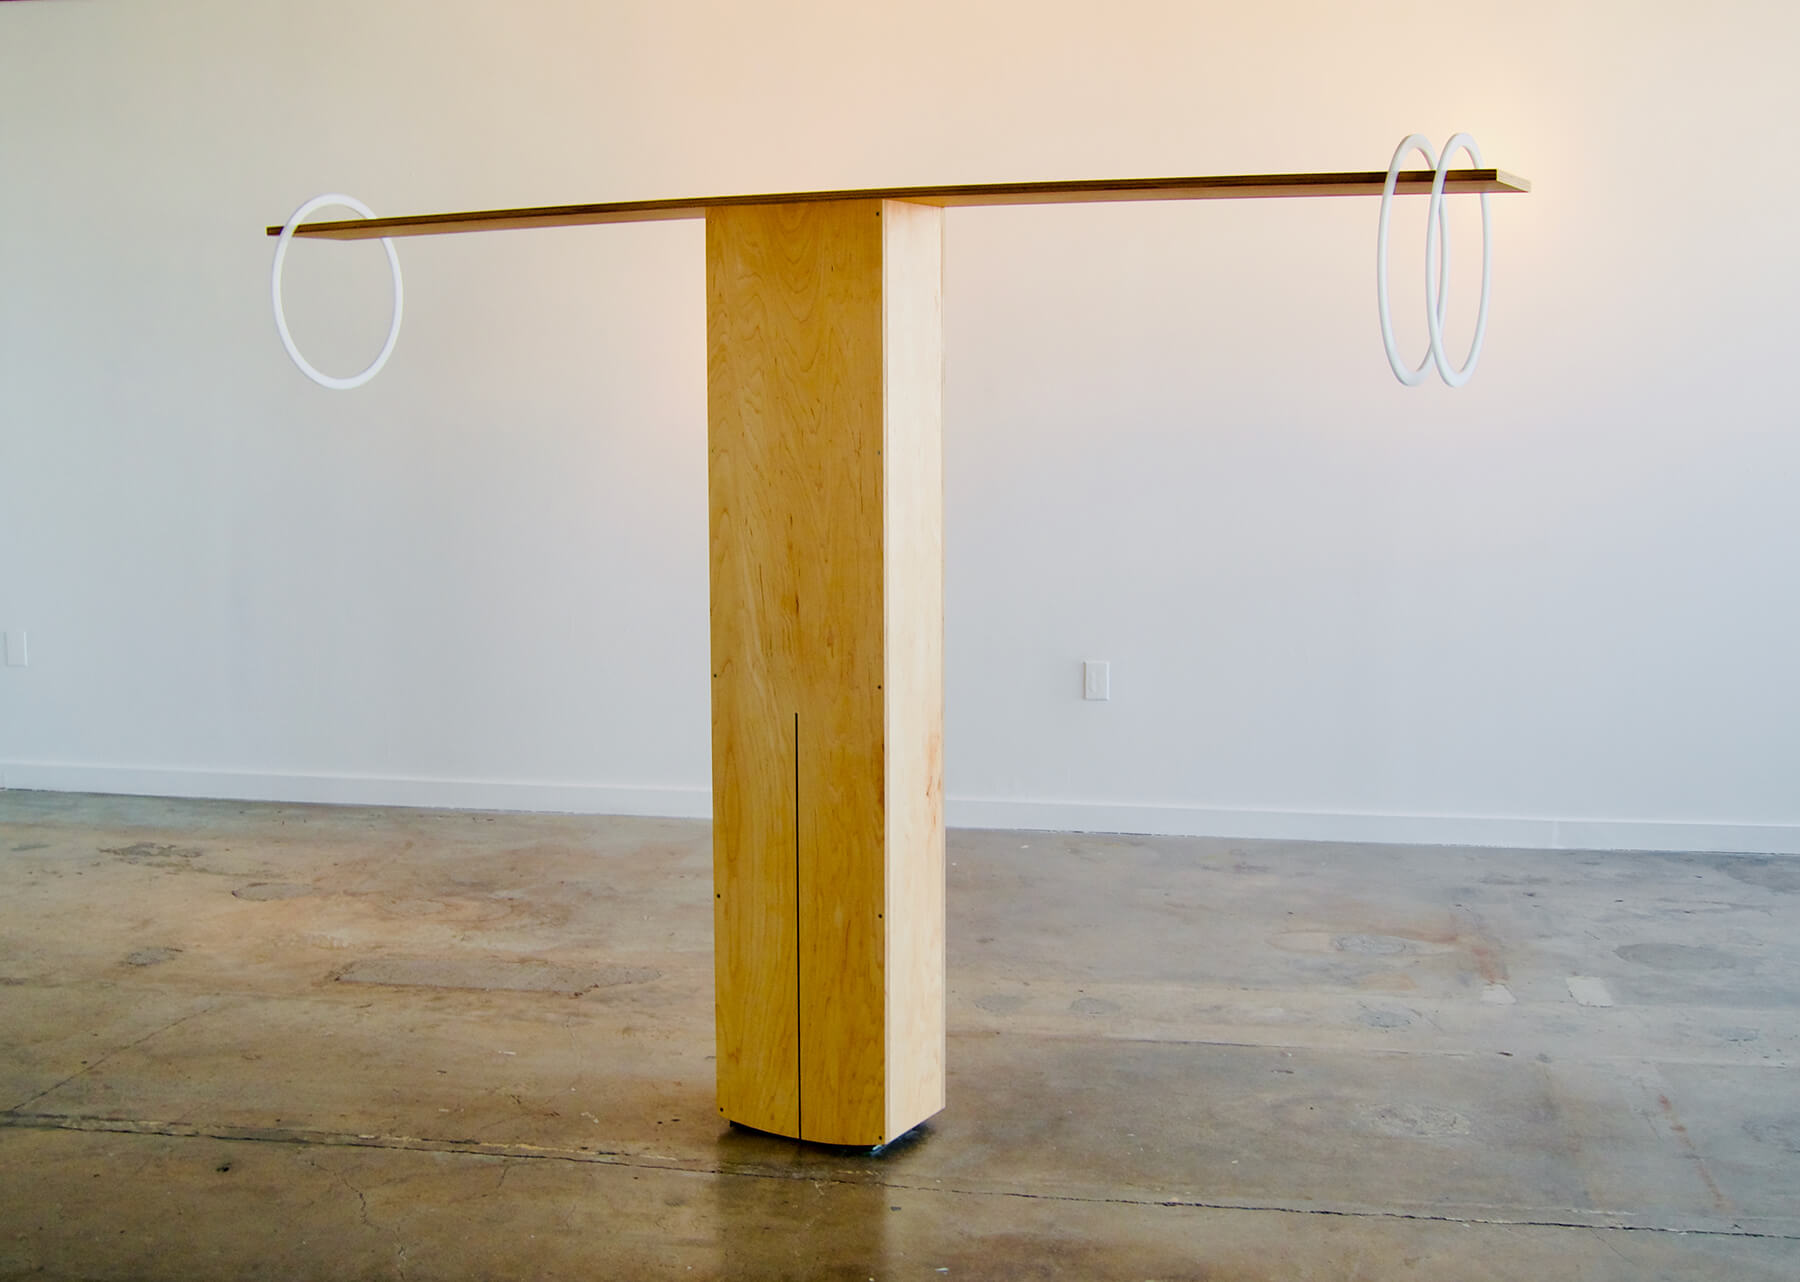 1,2, Wood, plexi, metal, 5 ft 7 in, x 8 ft x 17 in, 2013